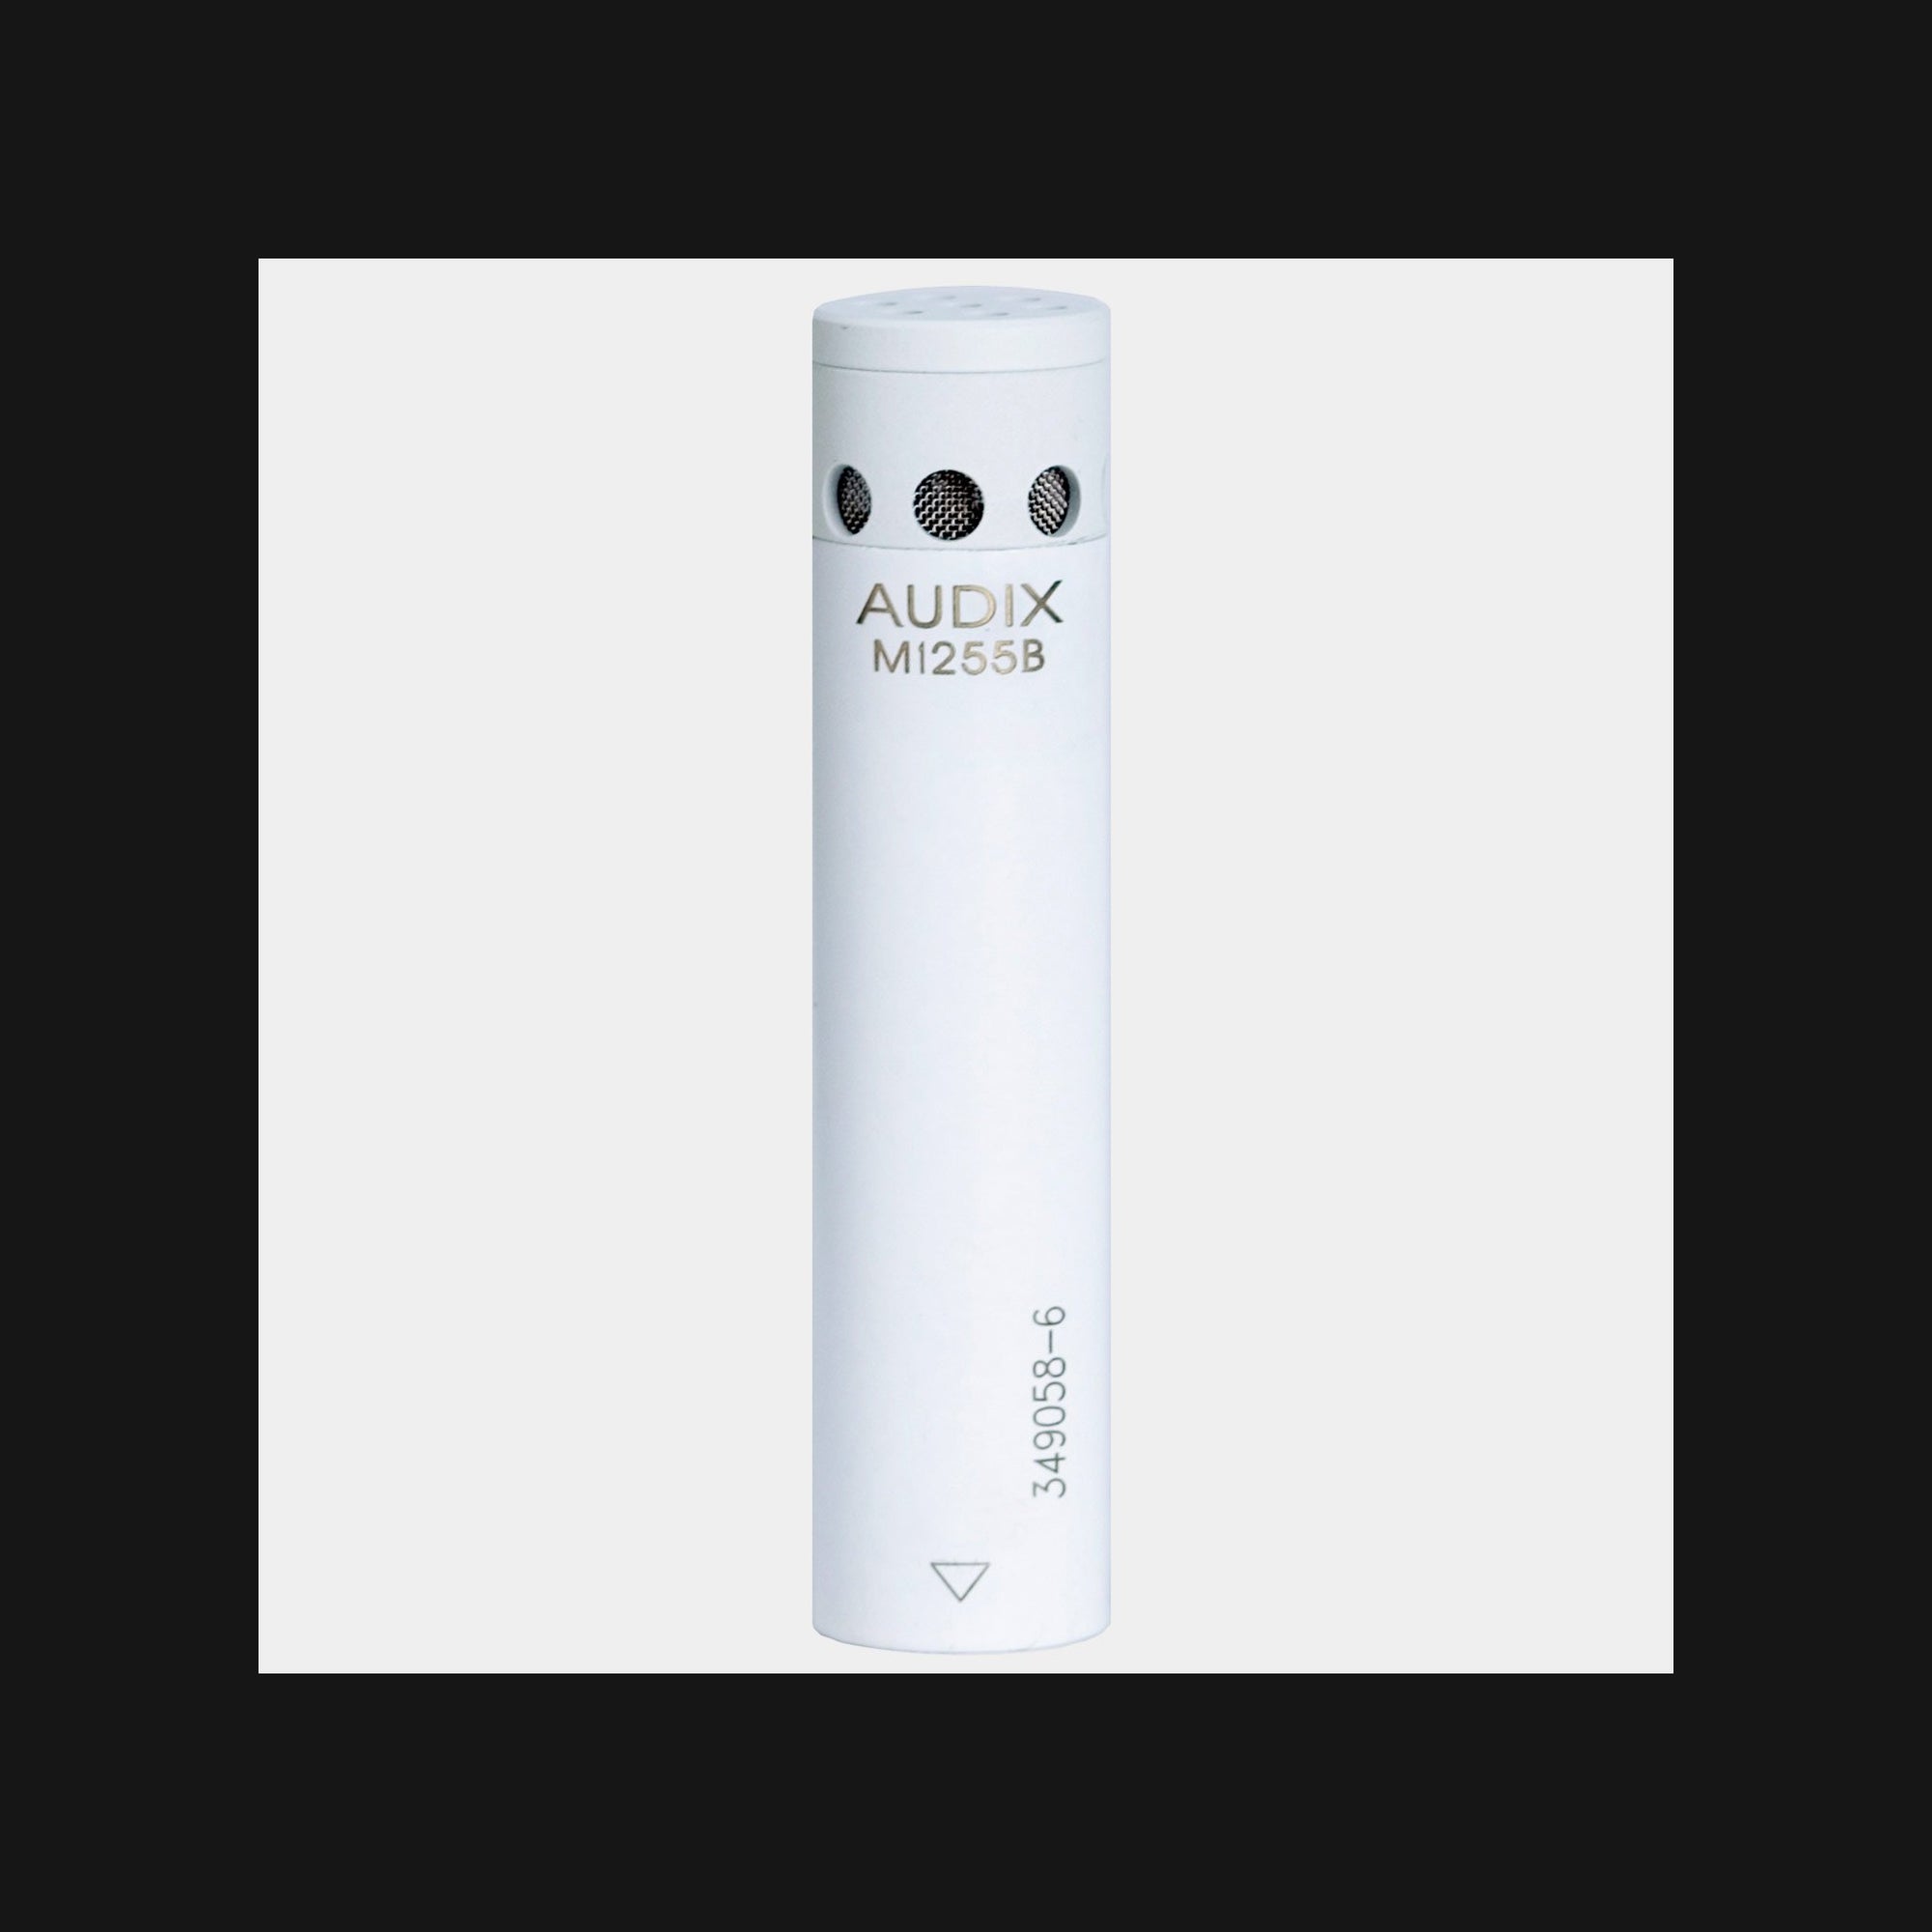 Audix M1255BW High-Sensitivity Miniature Carioid Microphone - White Close-up